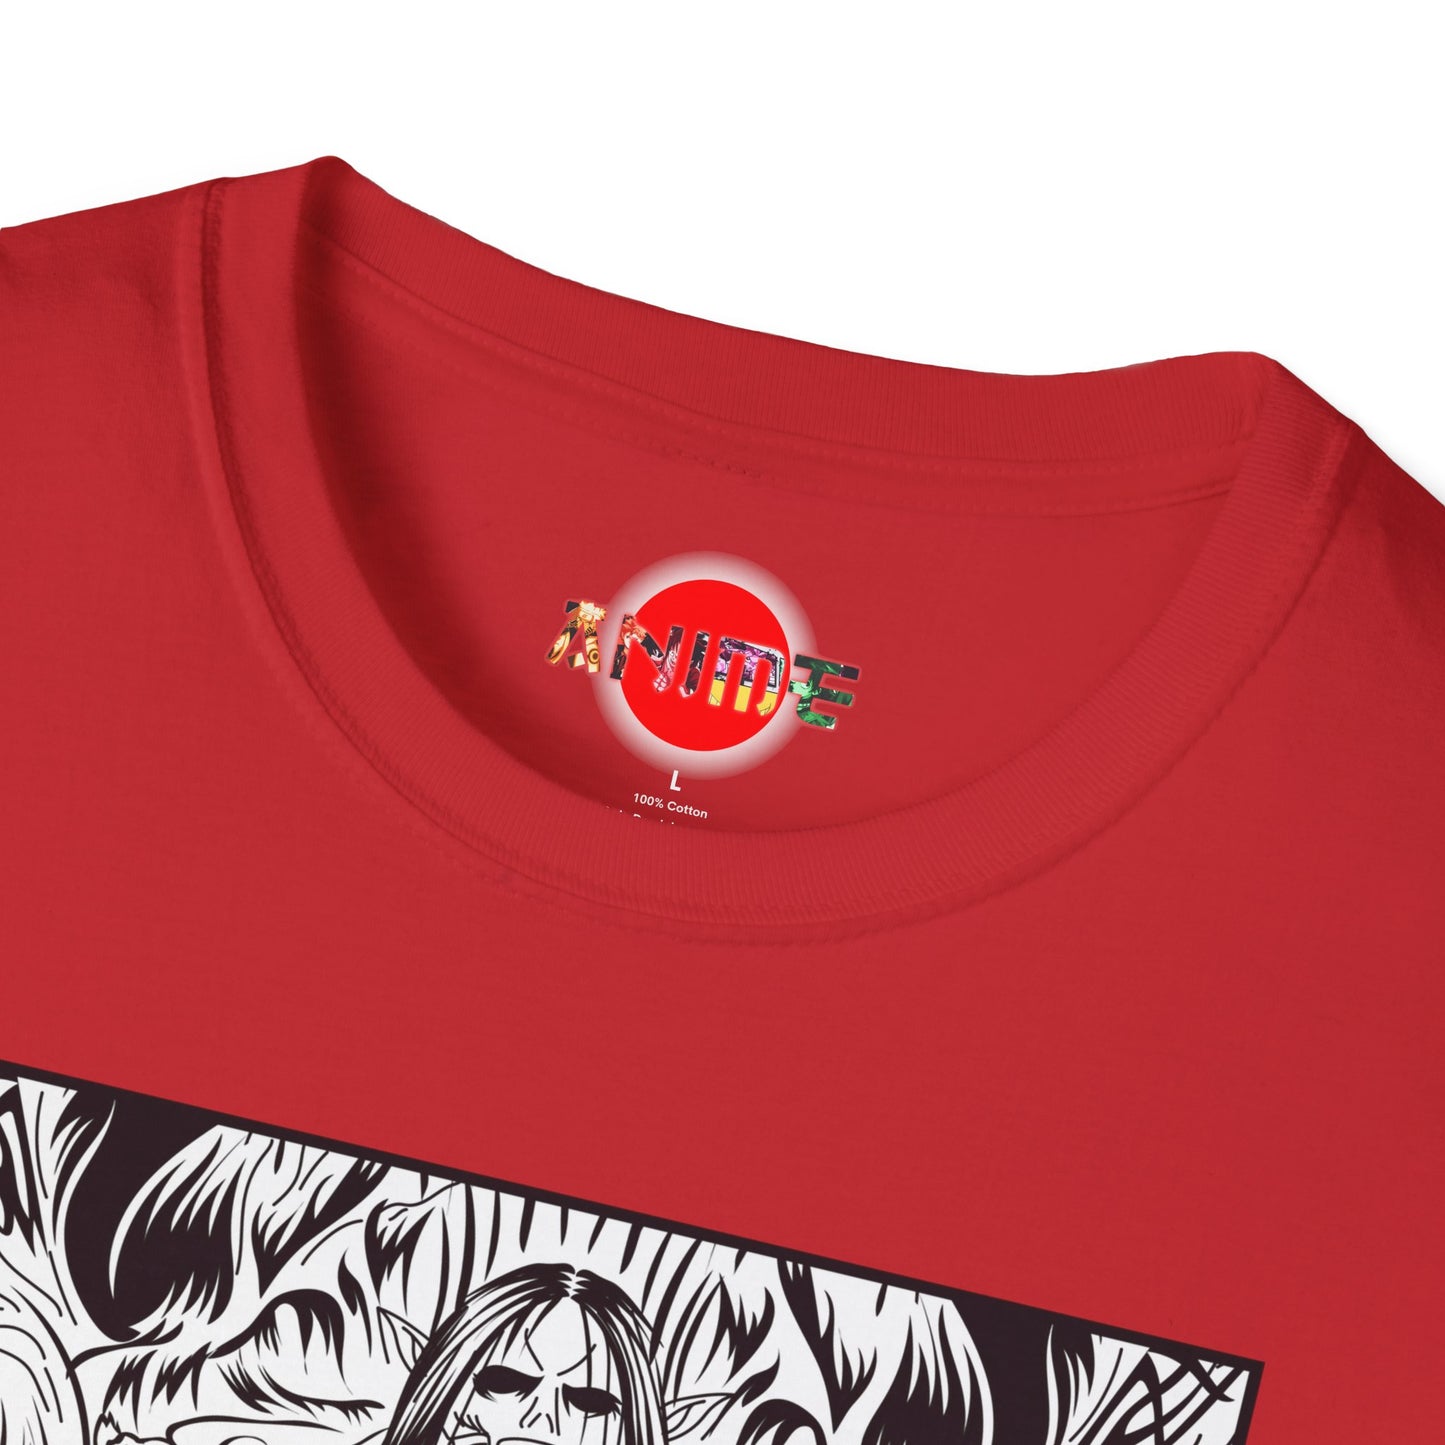 Attack on Titans Mikasa Ackerman Netflix Anime Series New Unisex Softstyle T-Shirt